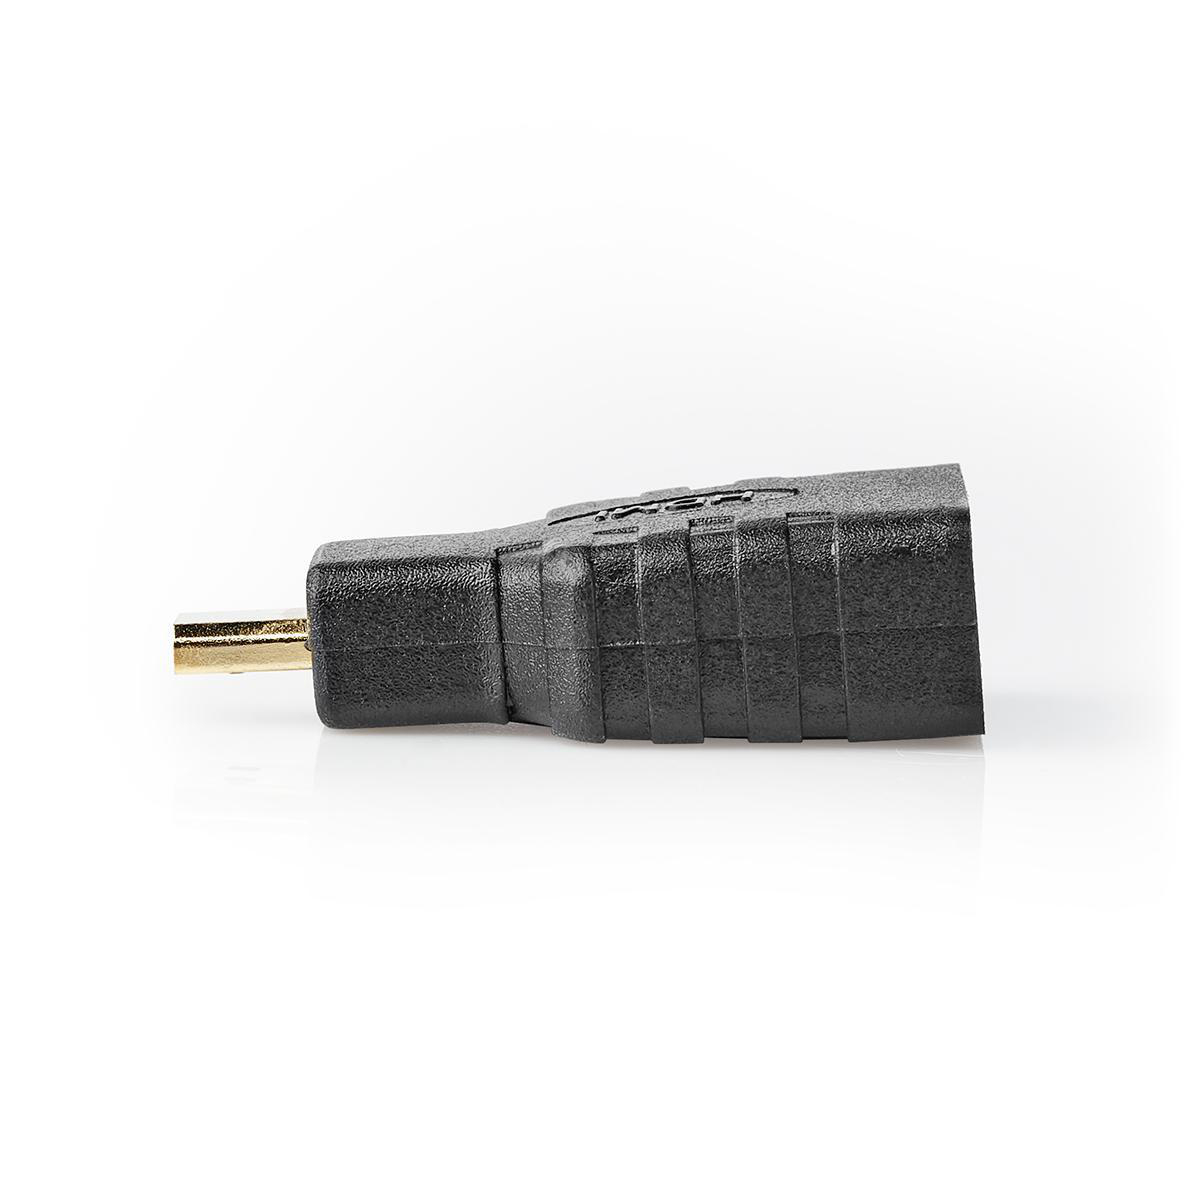 HDMI NEDIS -Adapter CVGP34907BK